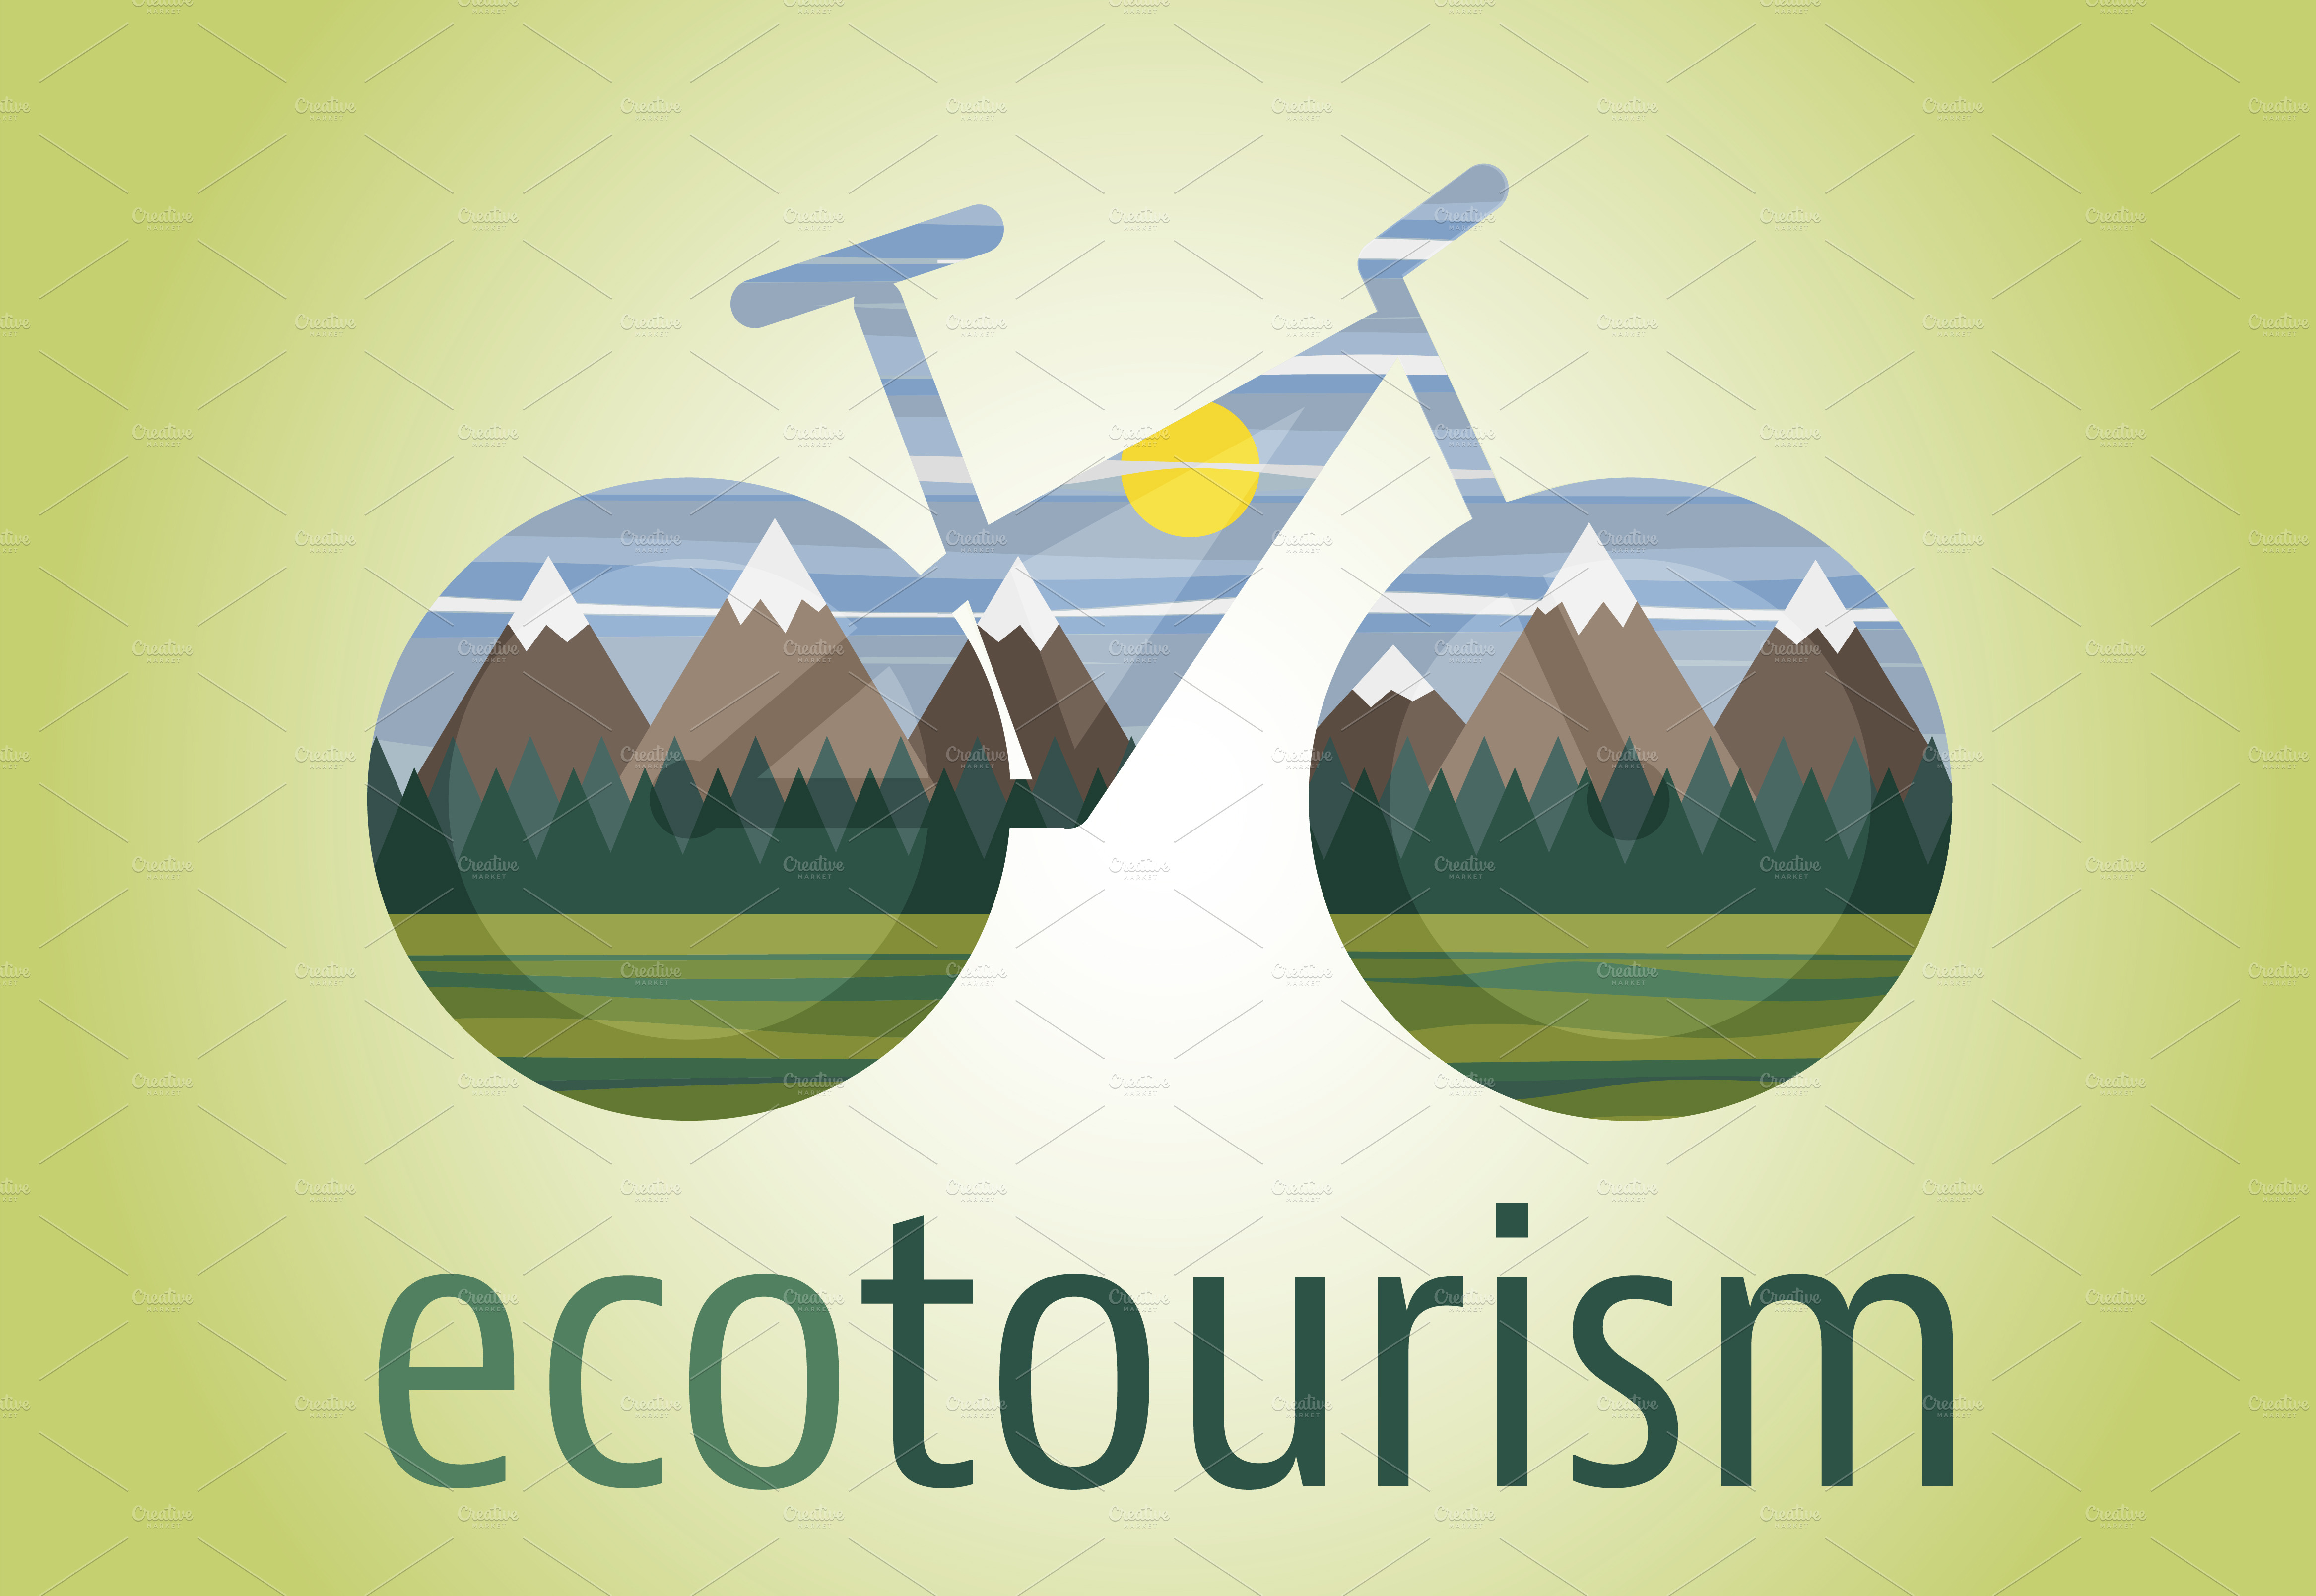 logo nature tourism